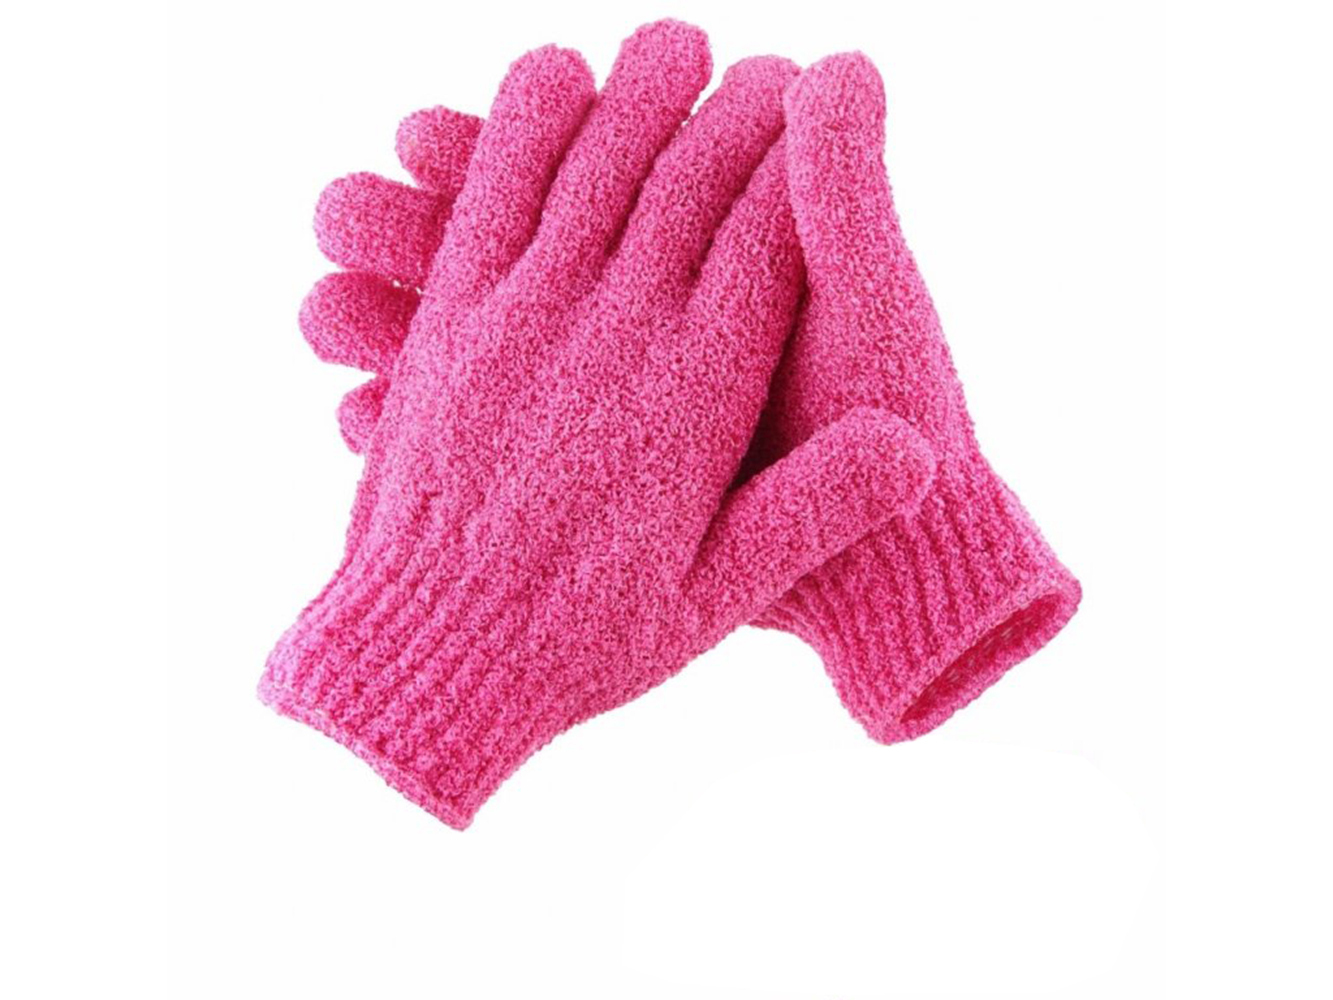 Пилинг перчатка, массажная перчатка, антицеллюлитная перчатка для душа .